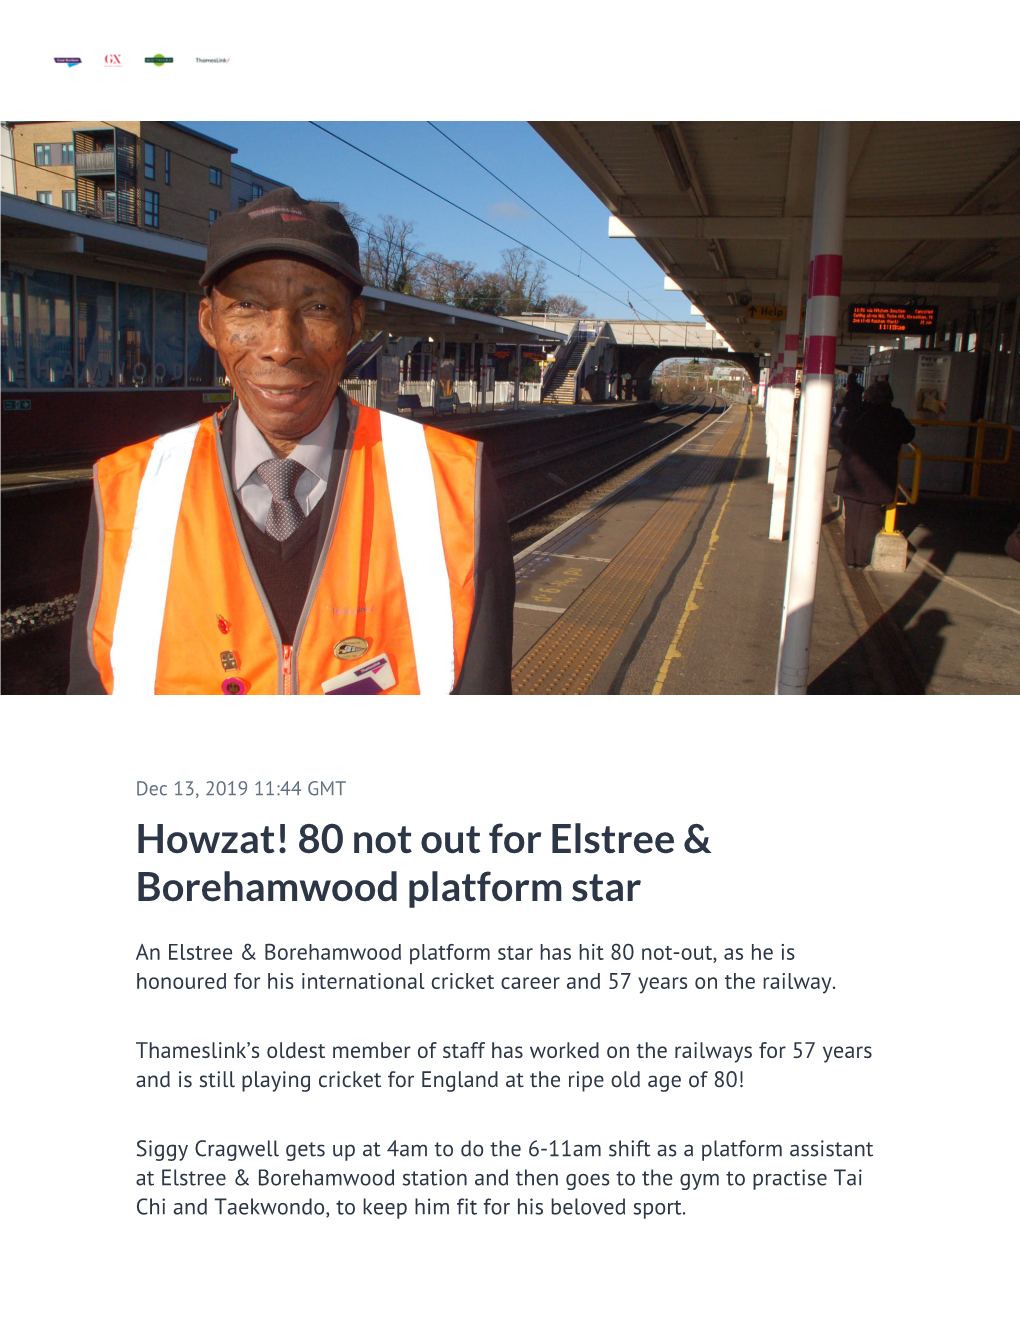 Howzat! 80 Not out for Elstree & Borehamwood Platform Star